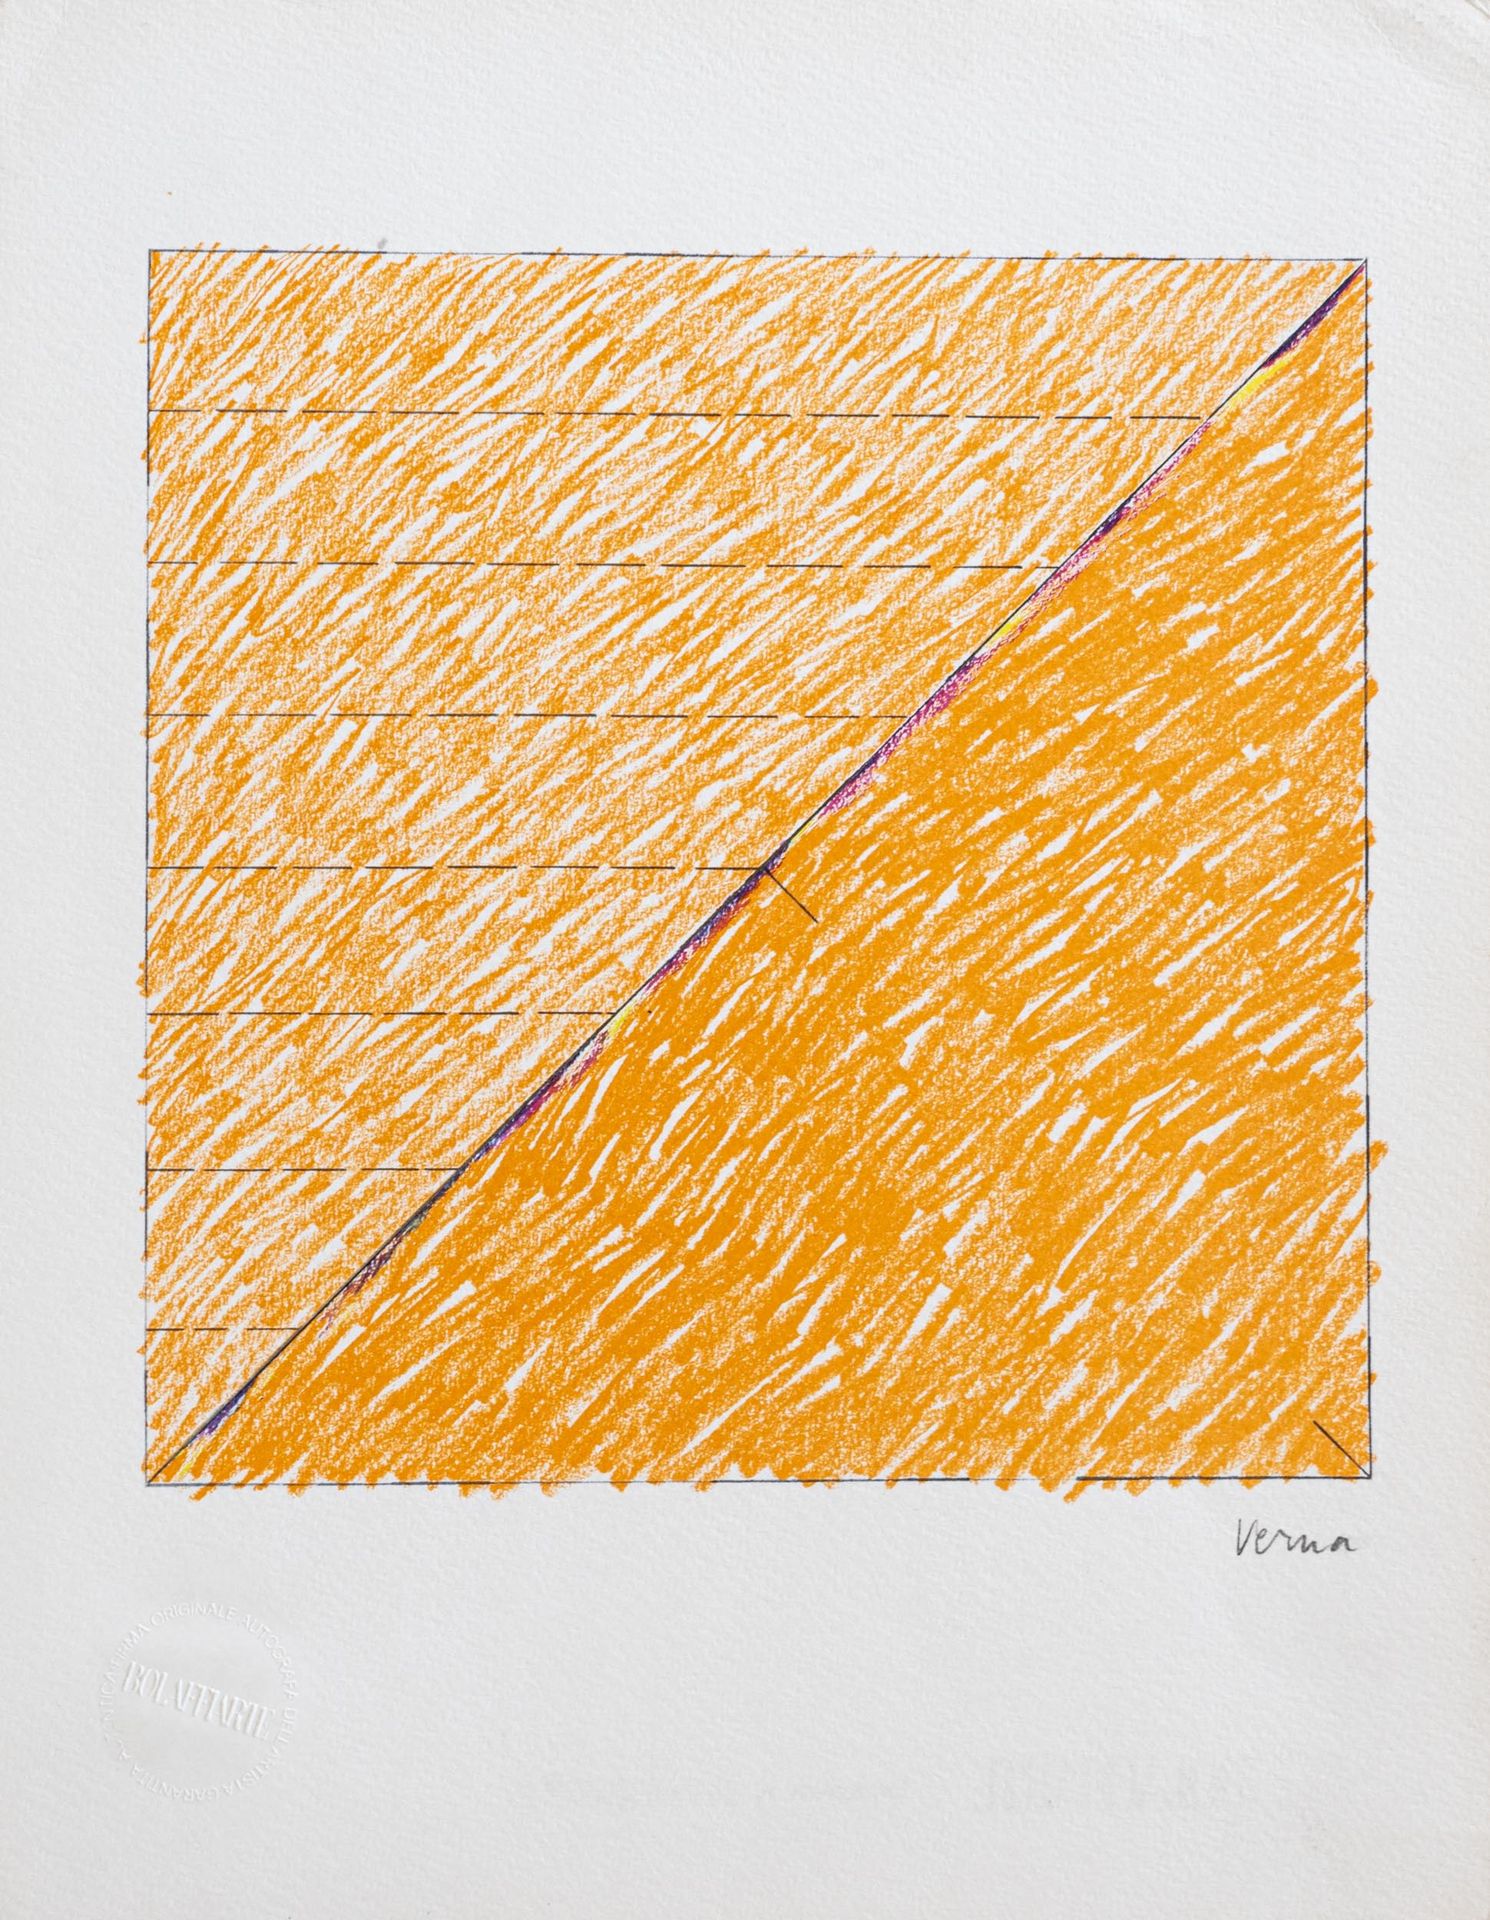 CLAUDIO VERNA (Guardiagrele 1937) Wax drawing made for n. 37 of Bolaffi Arte

ph&hellip;